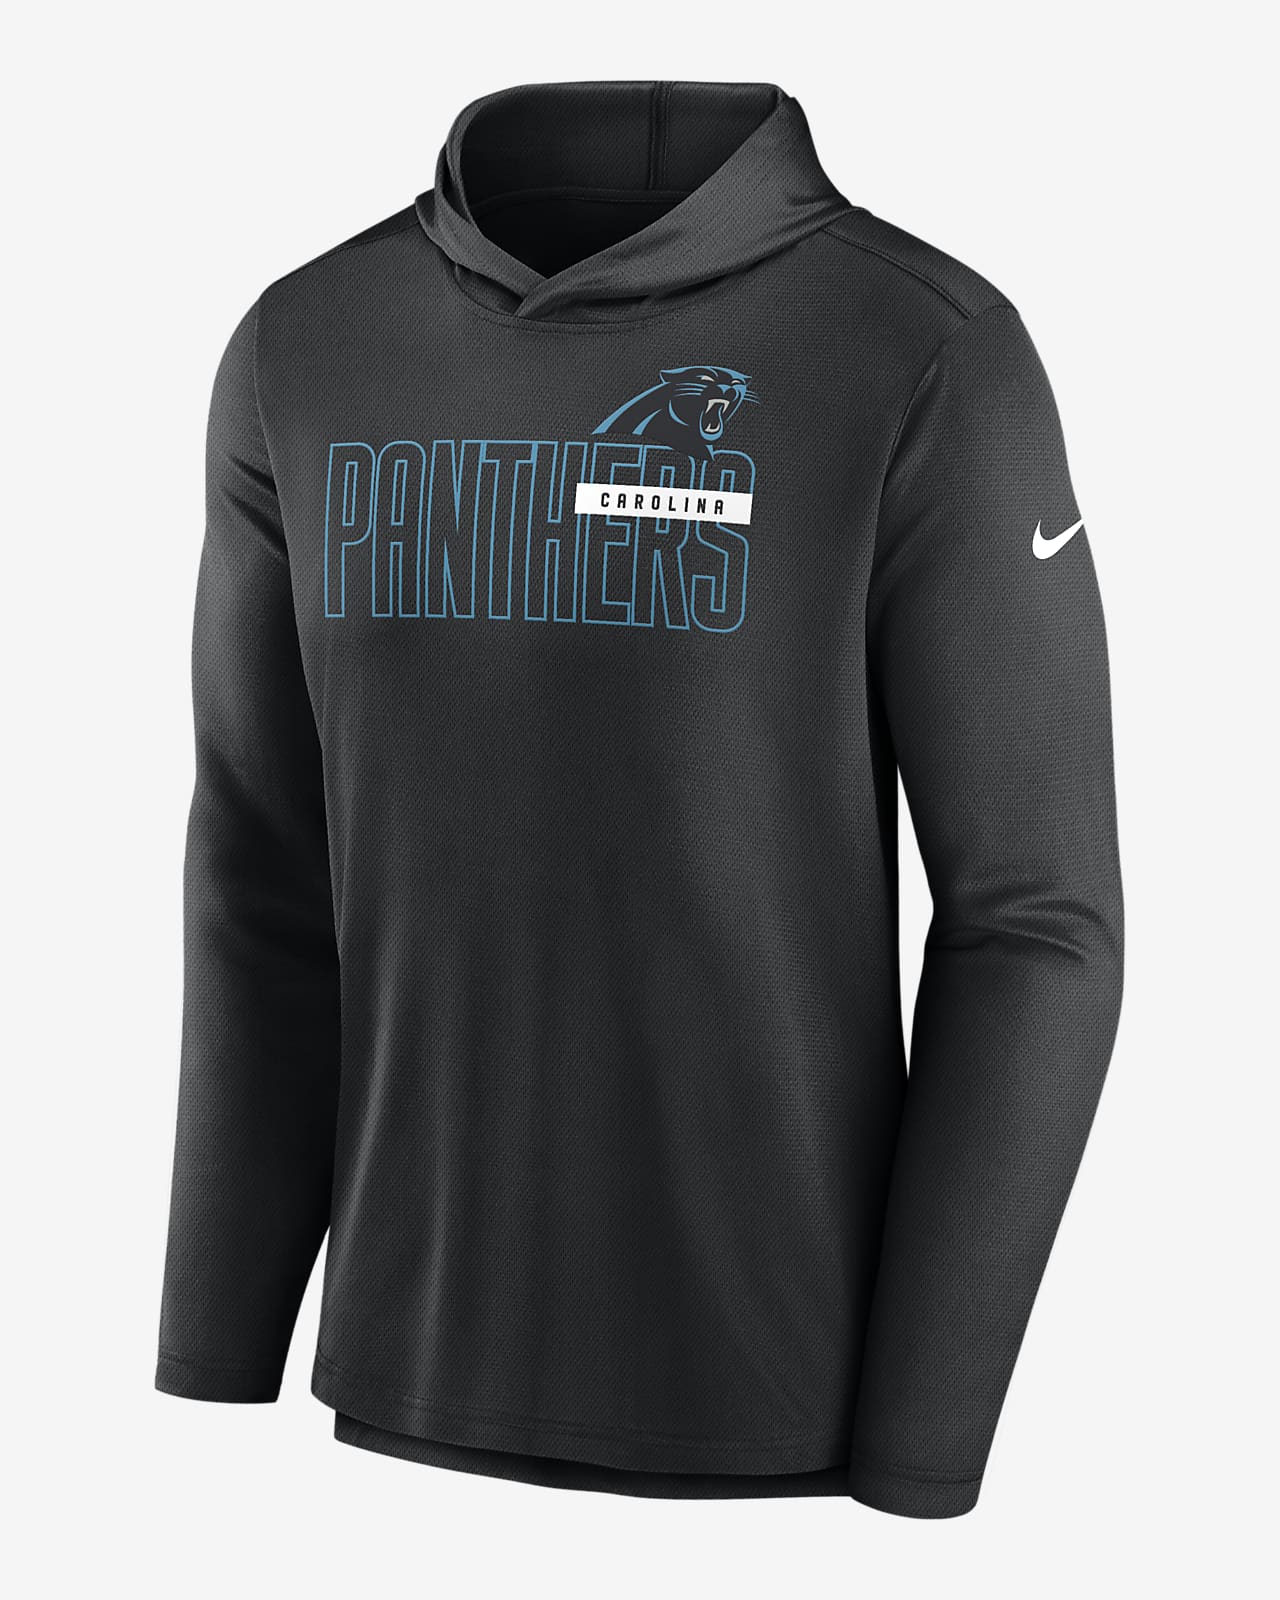 Nike Dri-FIT Perform (NFL Carolina Panthers) Men's Pullover Hoodie